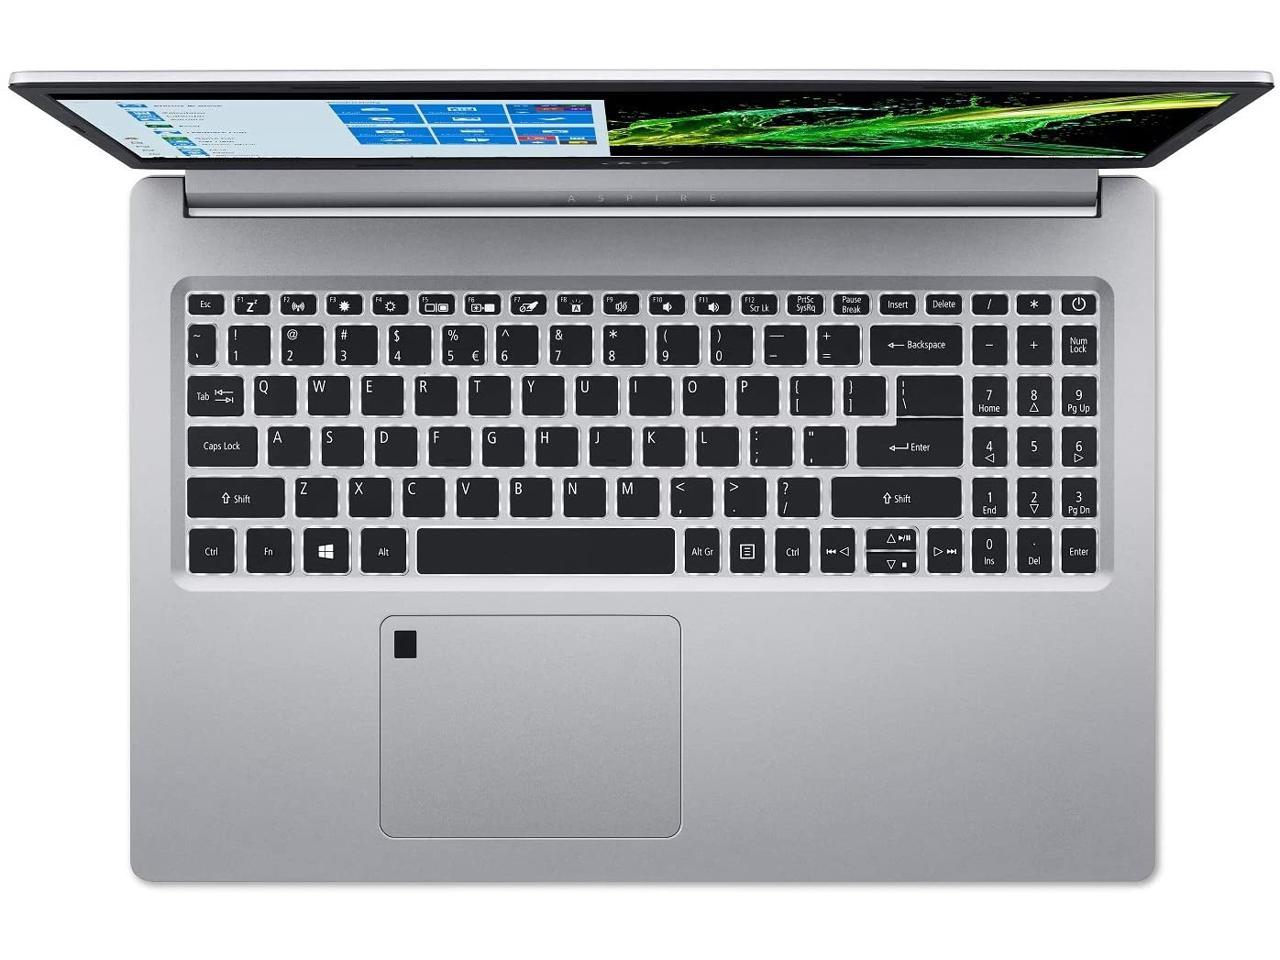 Acer Aspire 5 - 15.6" Laptop Intel Core i5-1035G1 1GHz 8GB Ram 256GB SSD Win10H